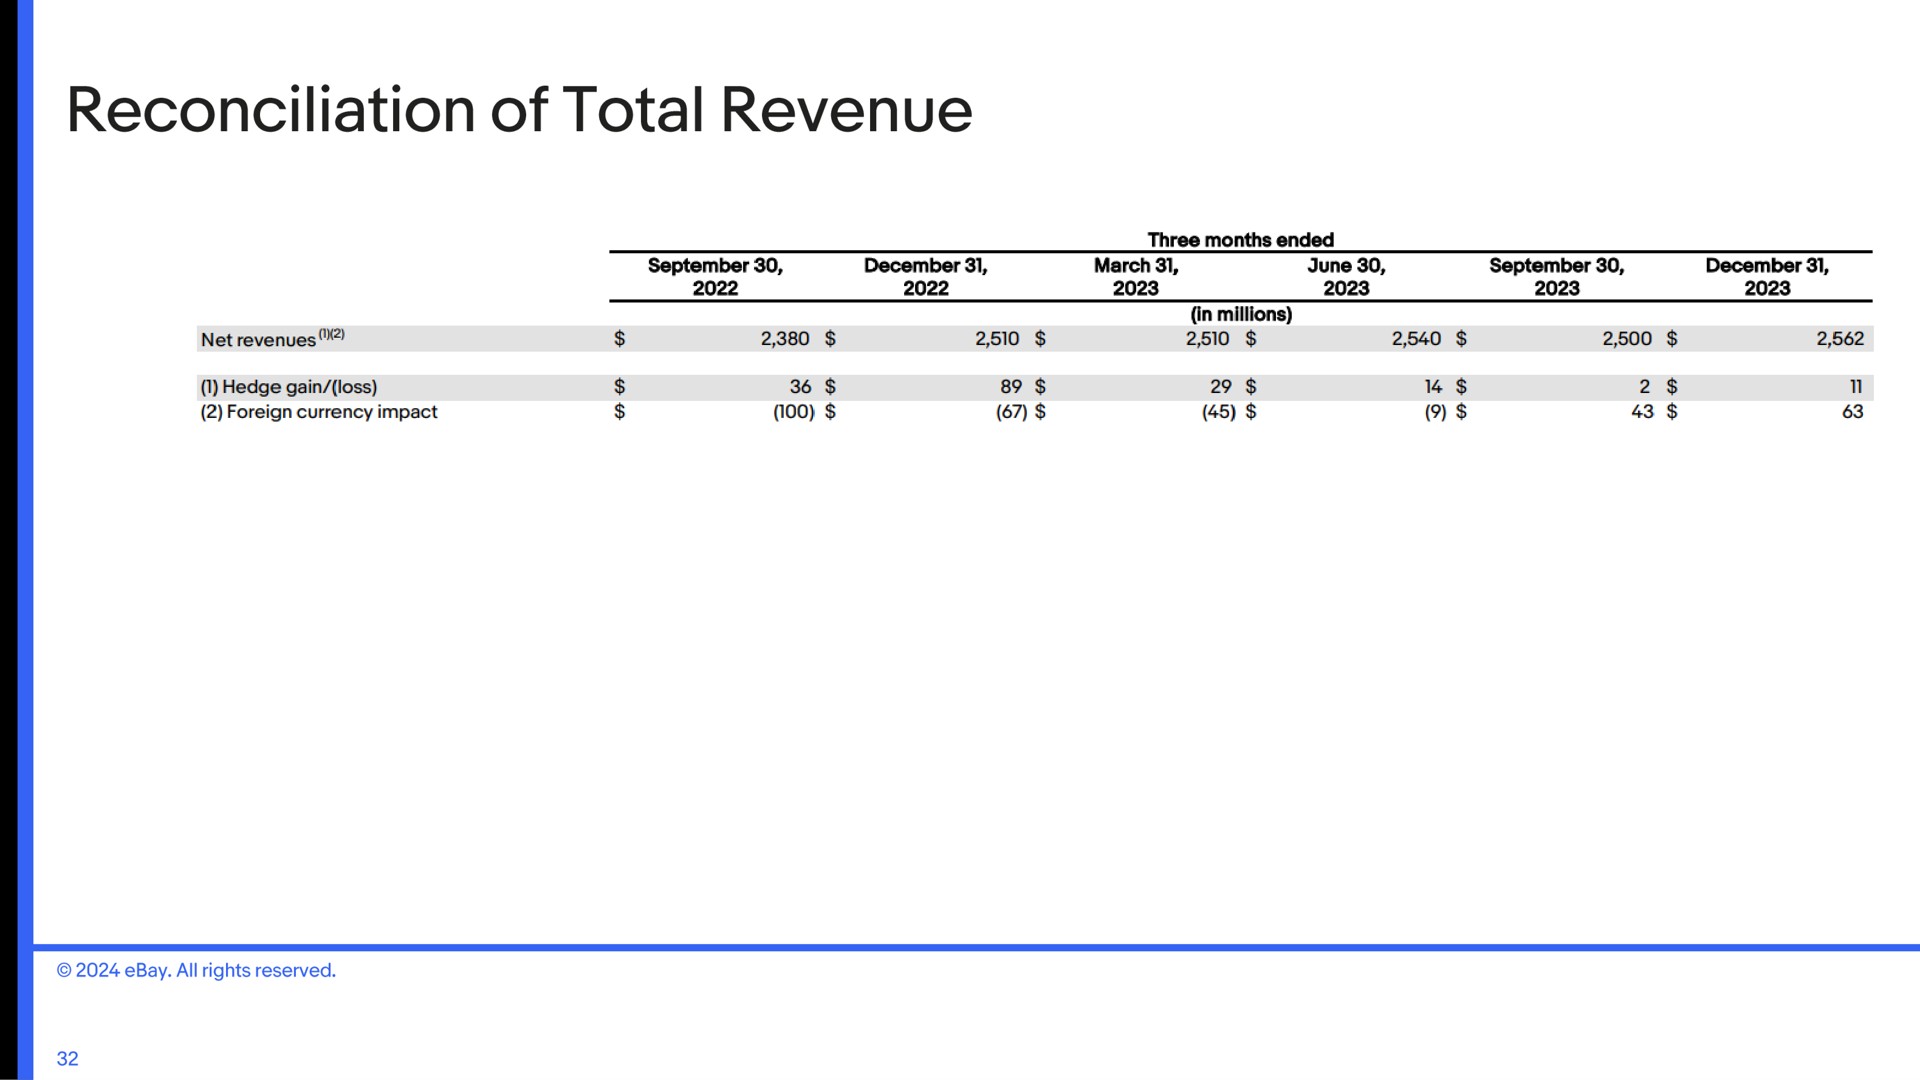 reconciliation of total revenue | eBay